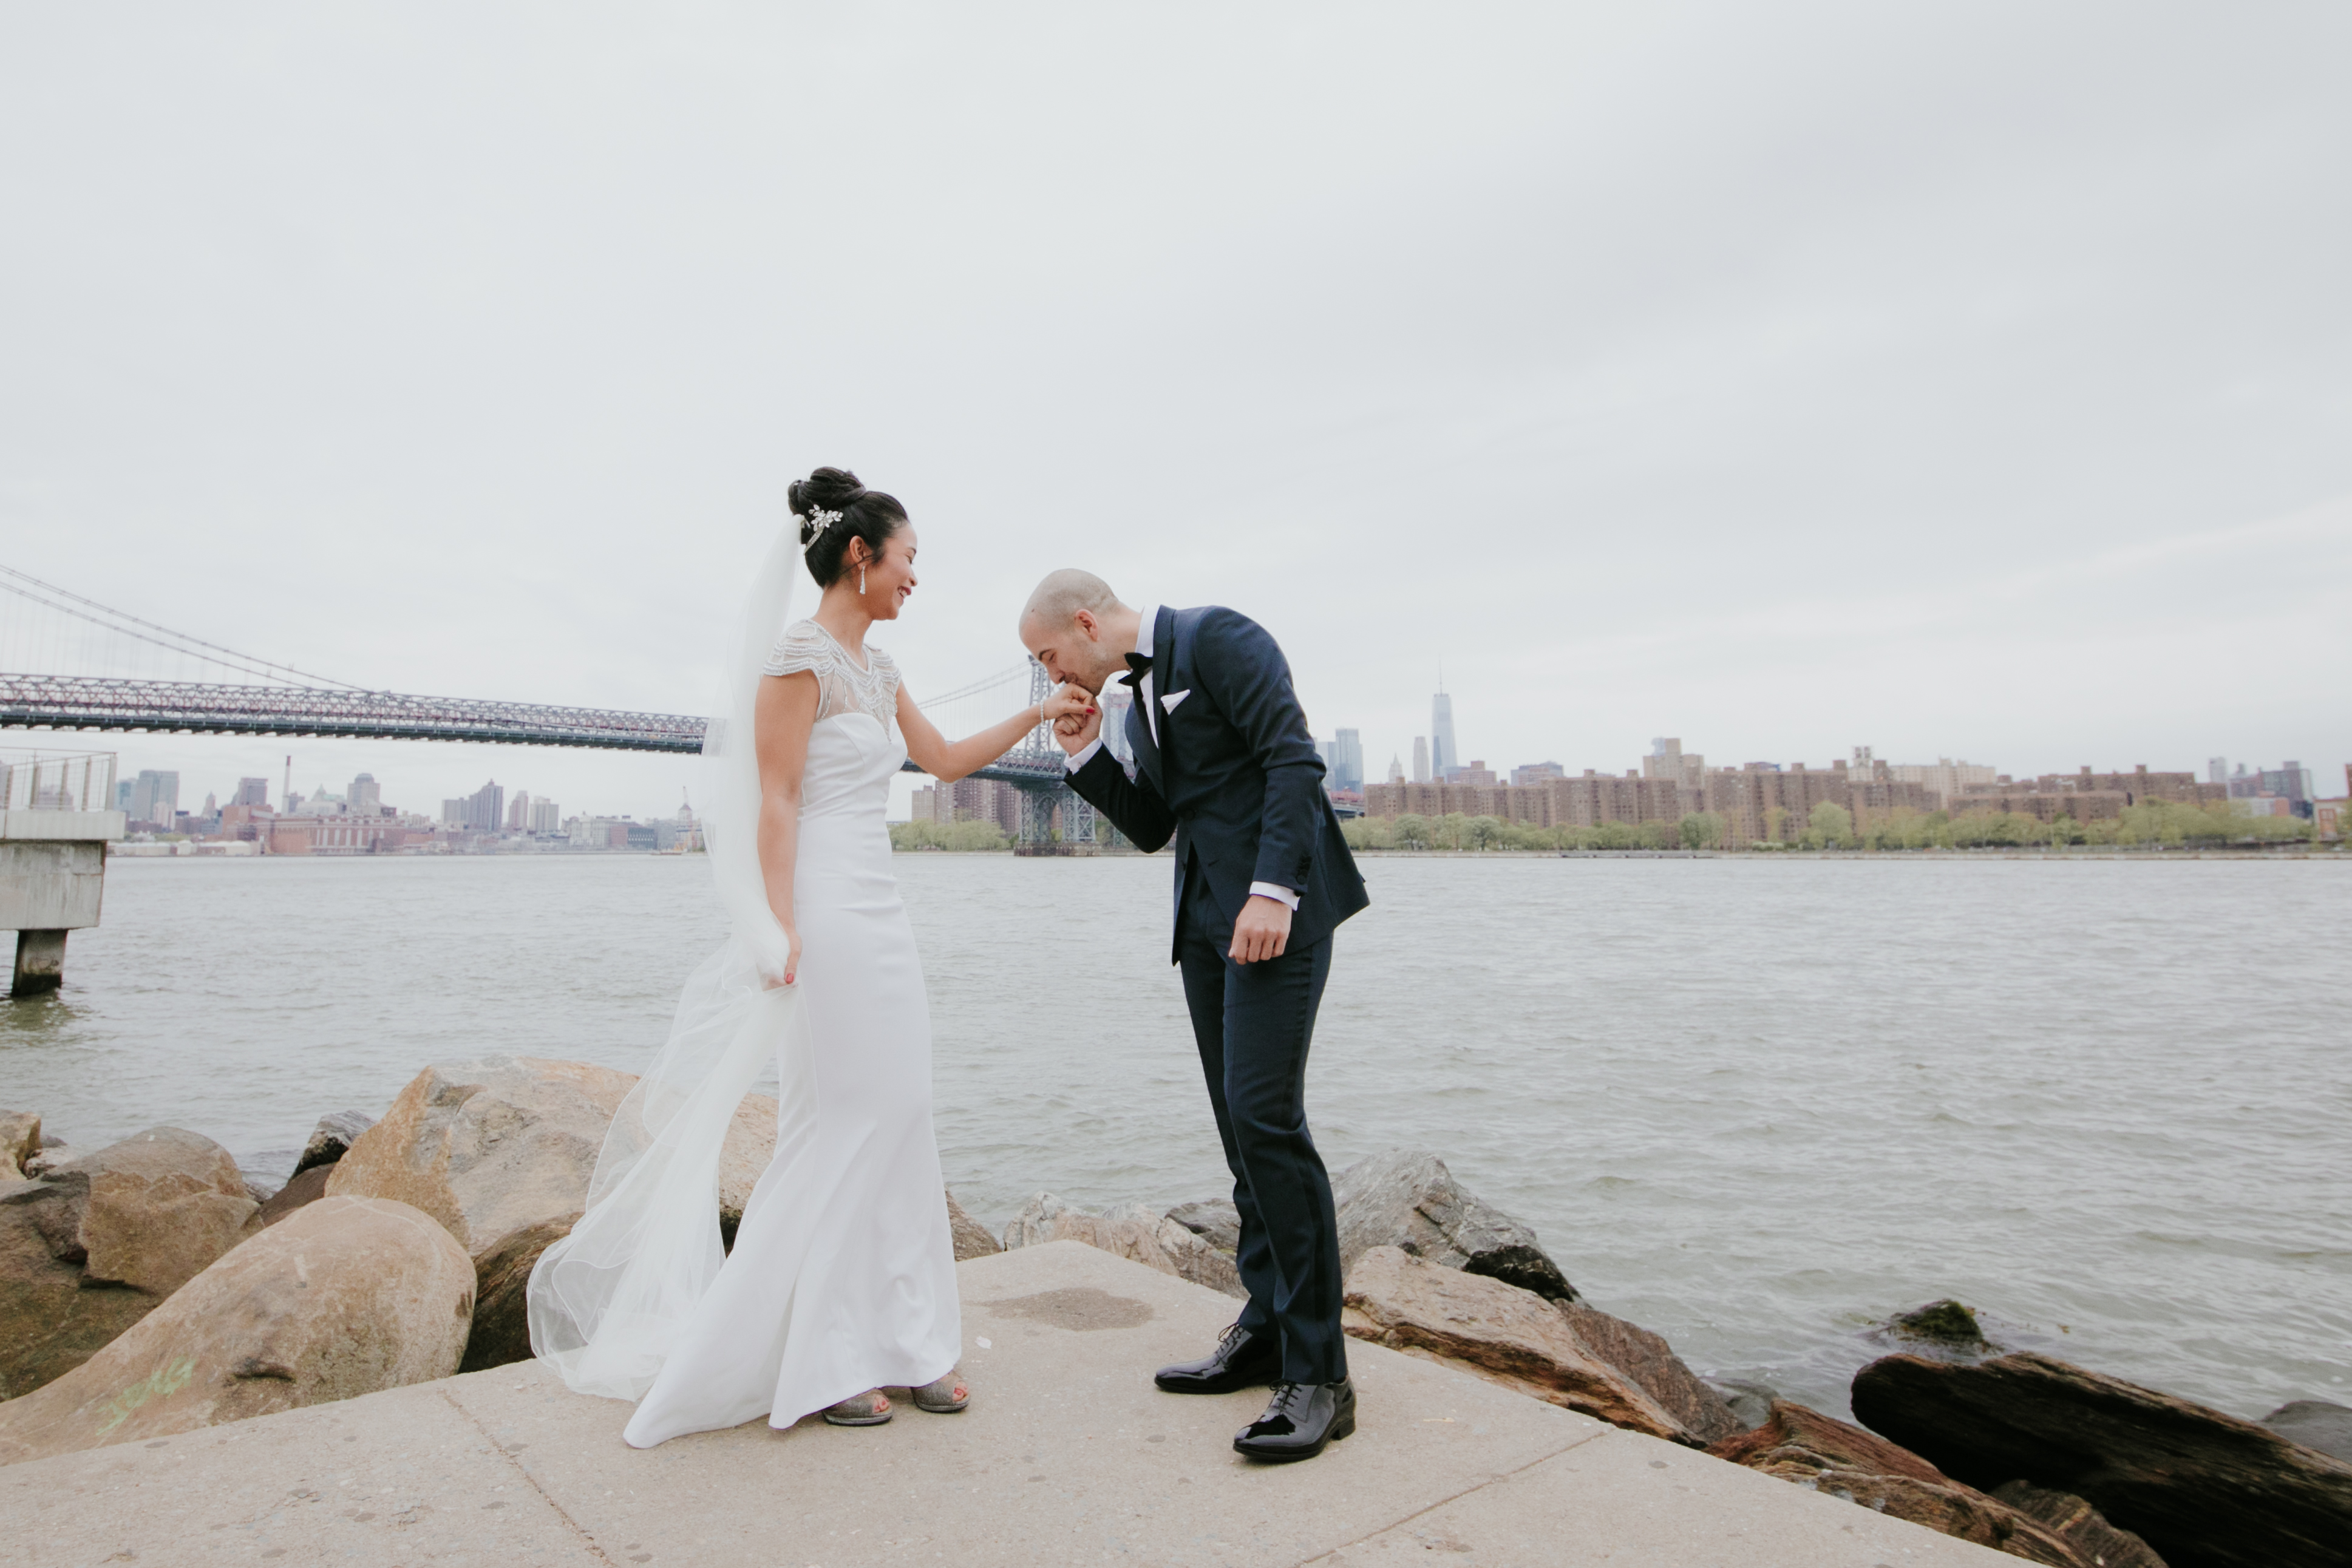 05 06 18 Elodie and Bertrand Wedding 84 - Wedding Video Sweepstakes Winners Wed at The W Loft in Brooklyn